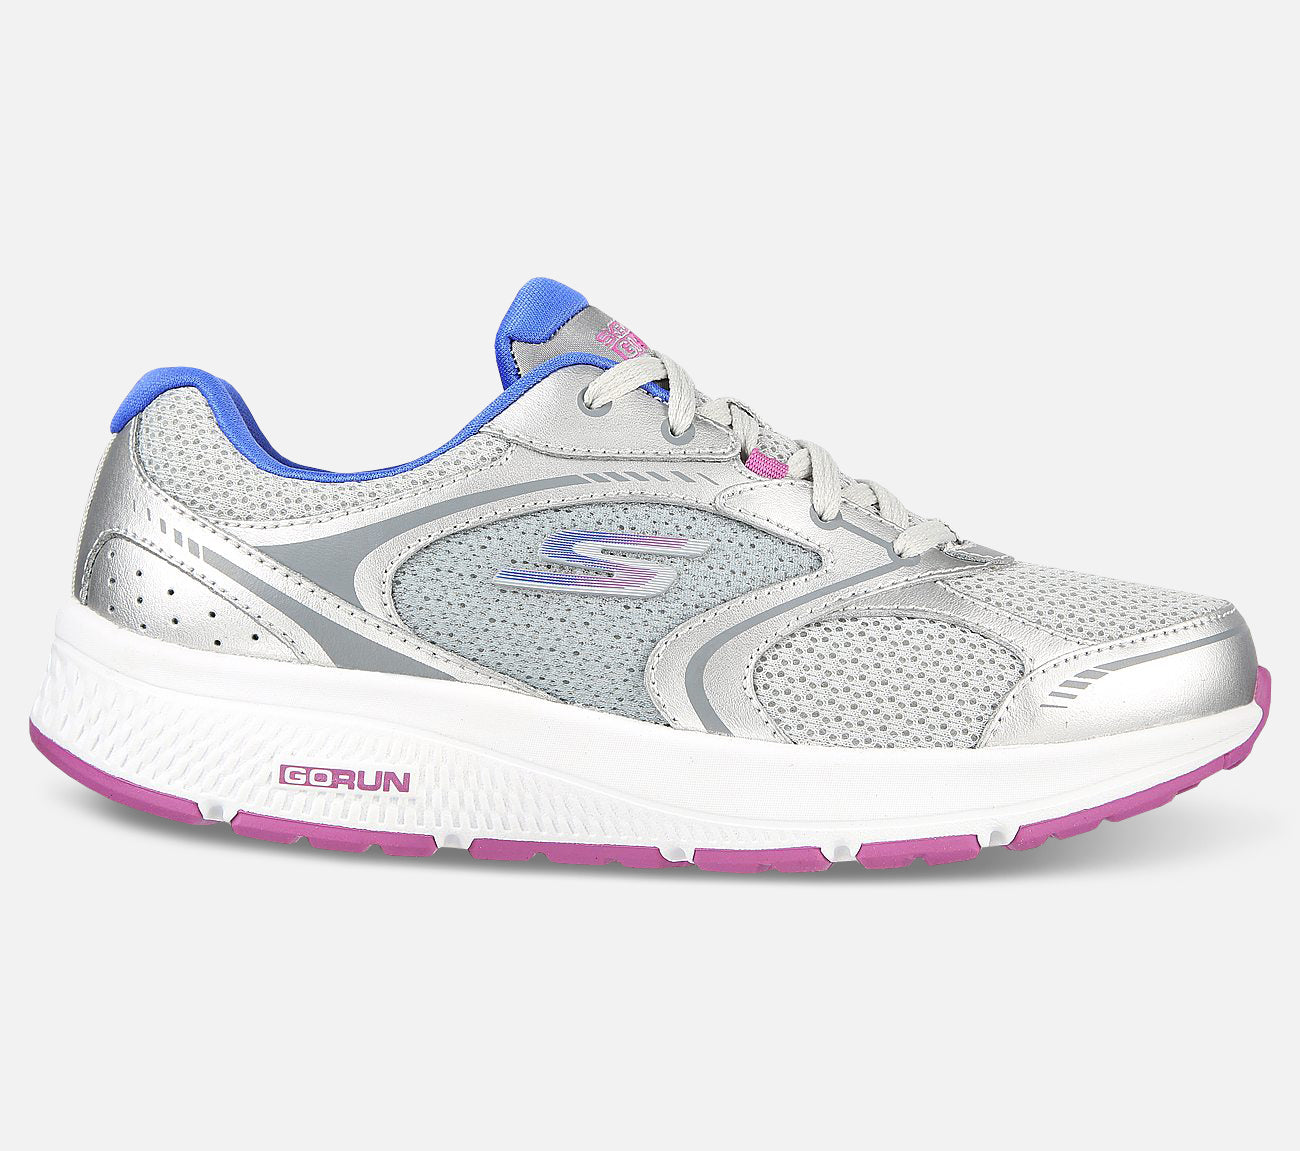 GO RUN Consistent - Chandra Shoe Skechers